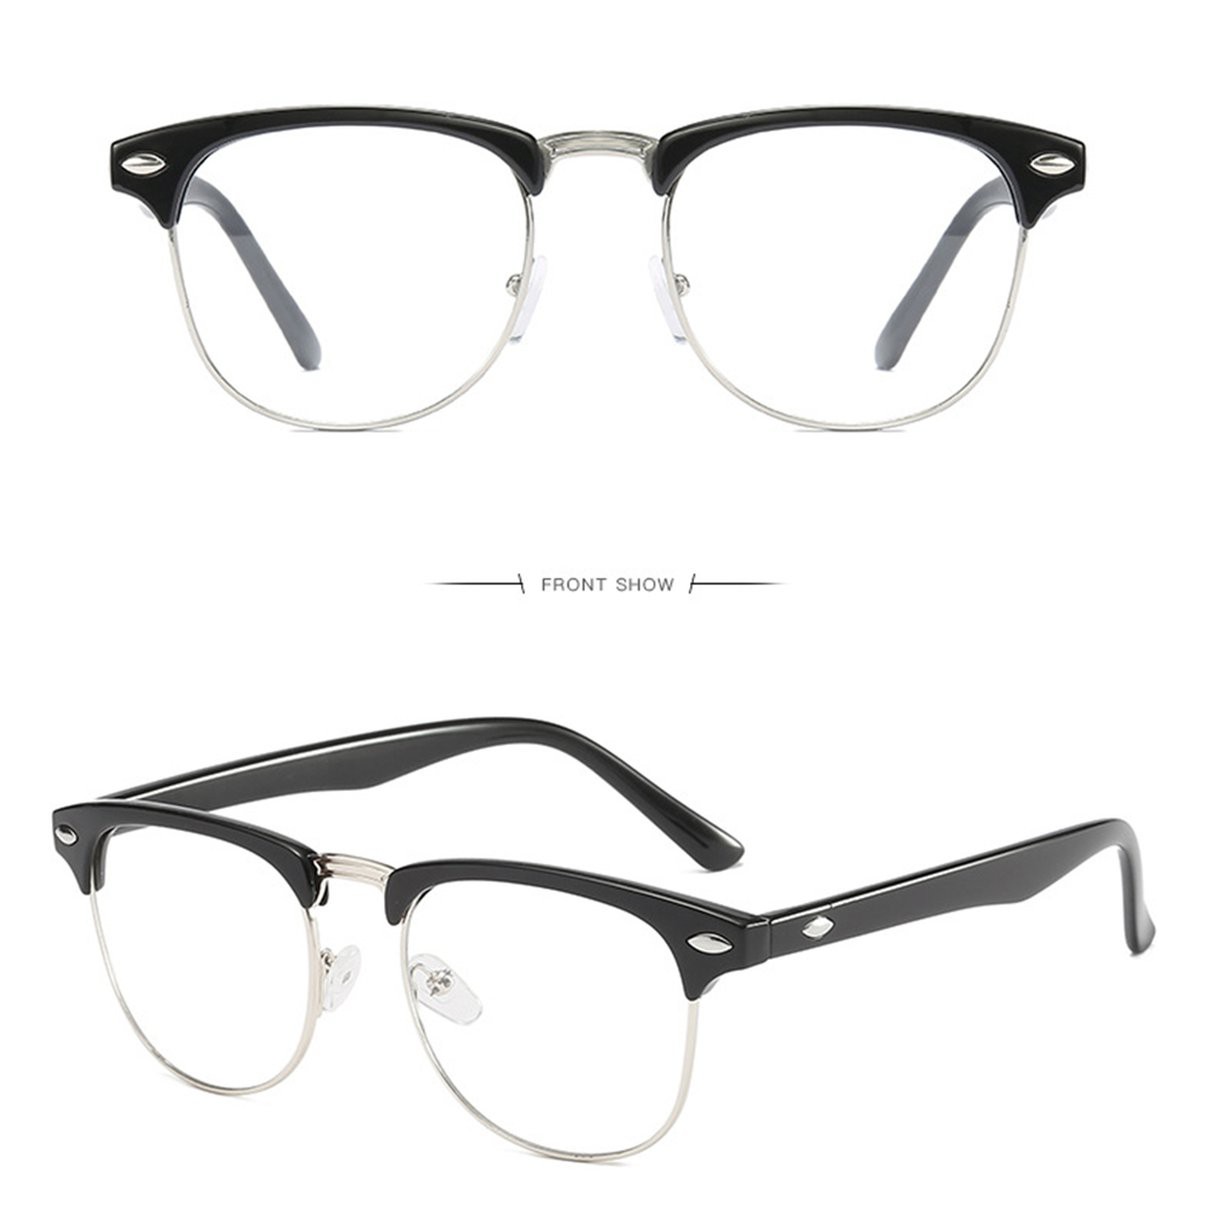 MBB Glasses Frame Square Prescription Eyeglasses Semi-Rimless Screwless Eyewear